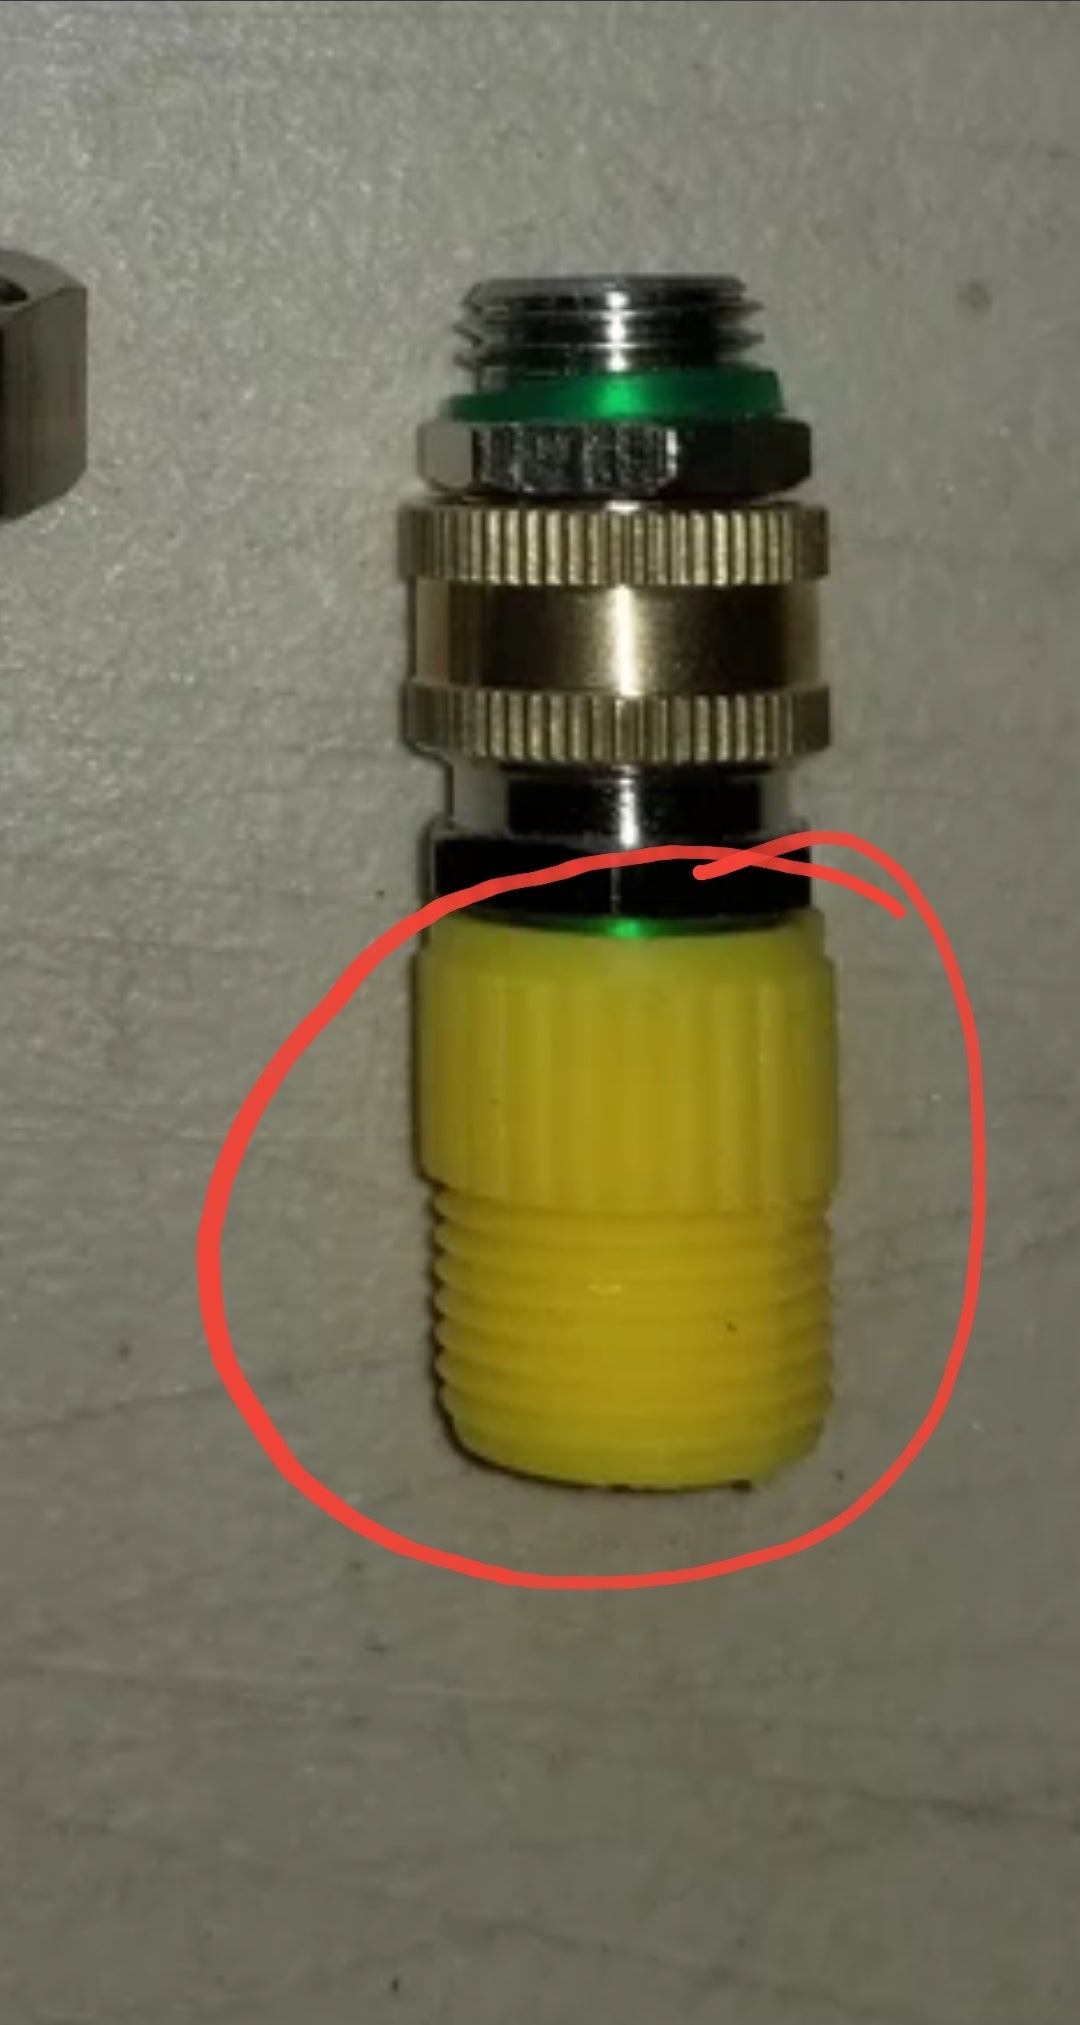 Male M18 to Female M14 Yellow Nylon Adapter